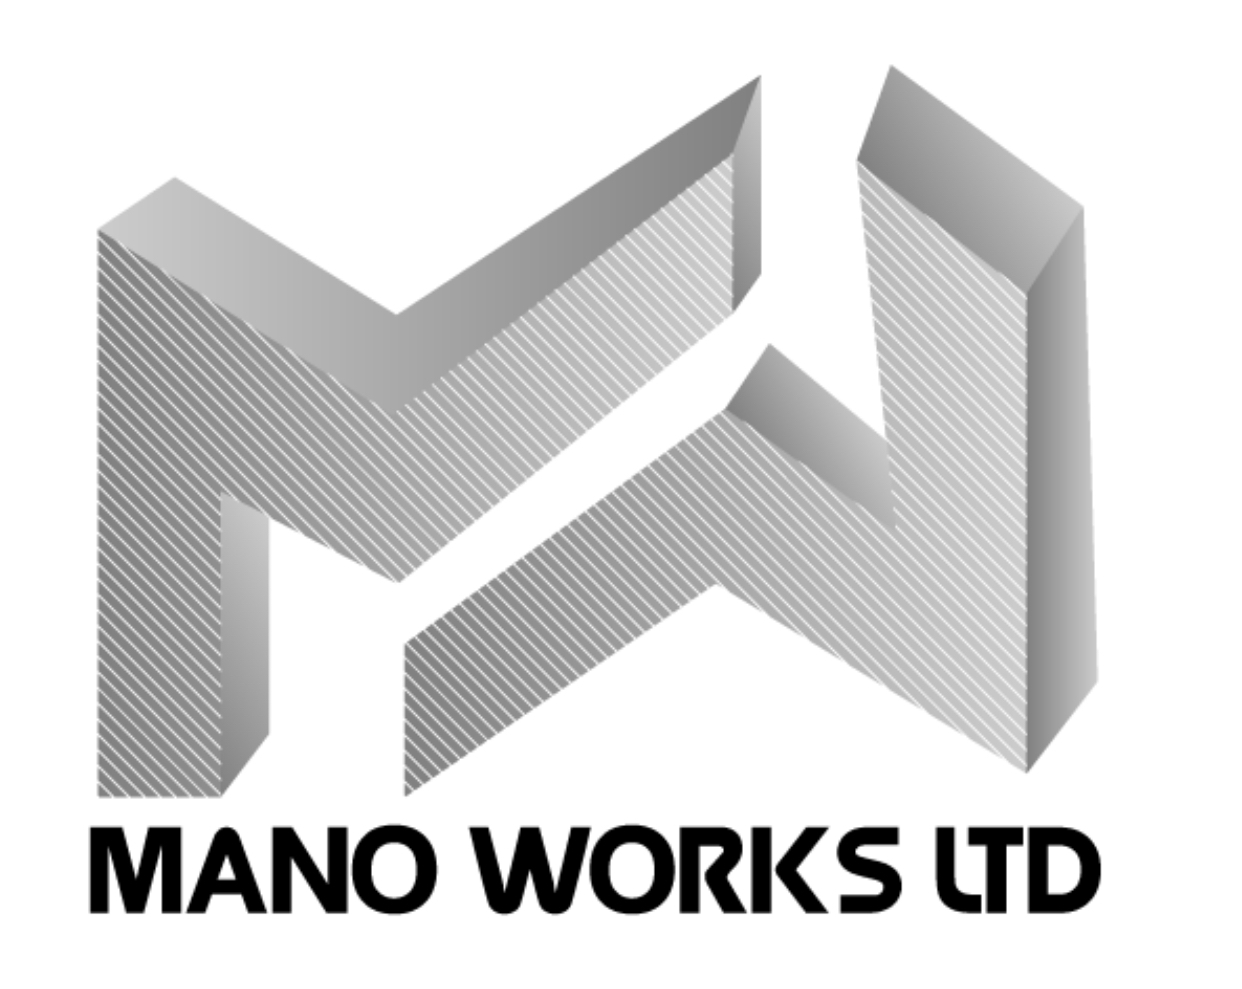 ManoWorks Ltd